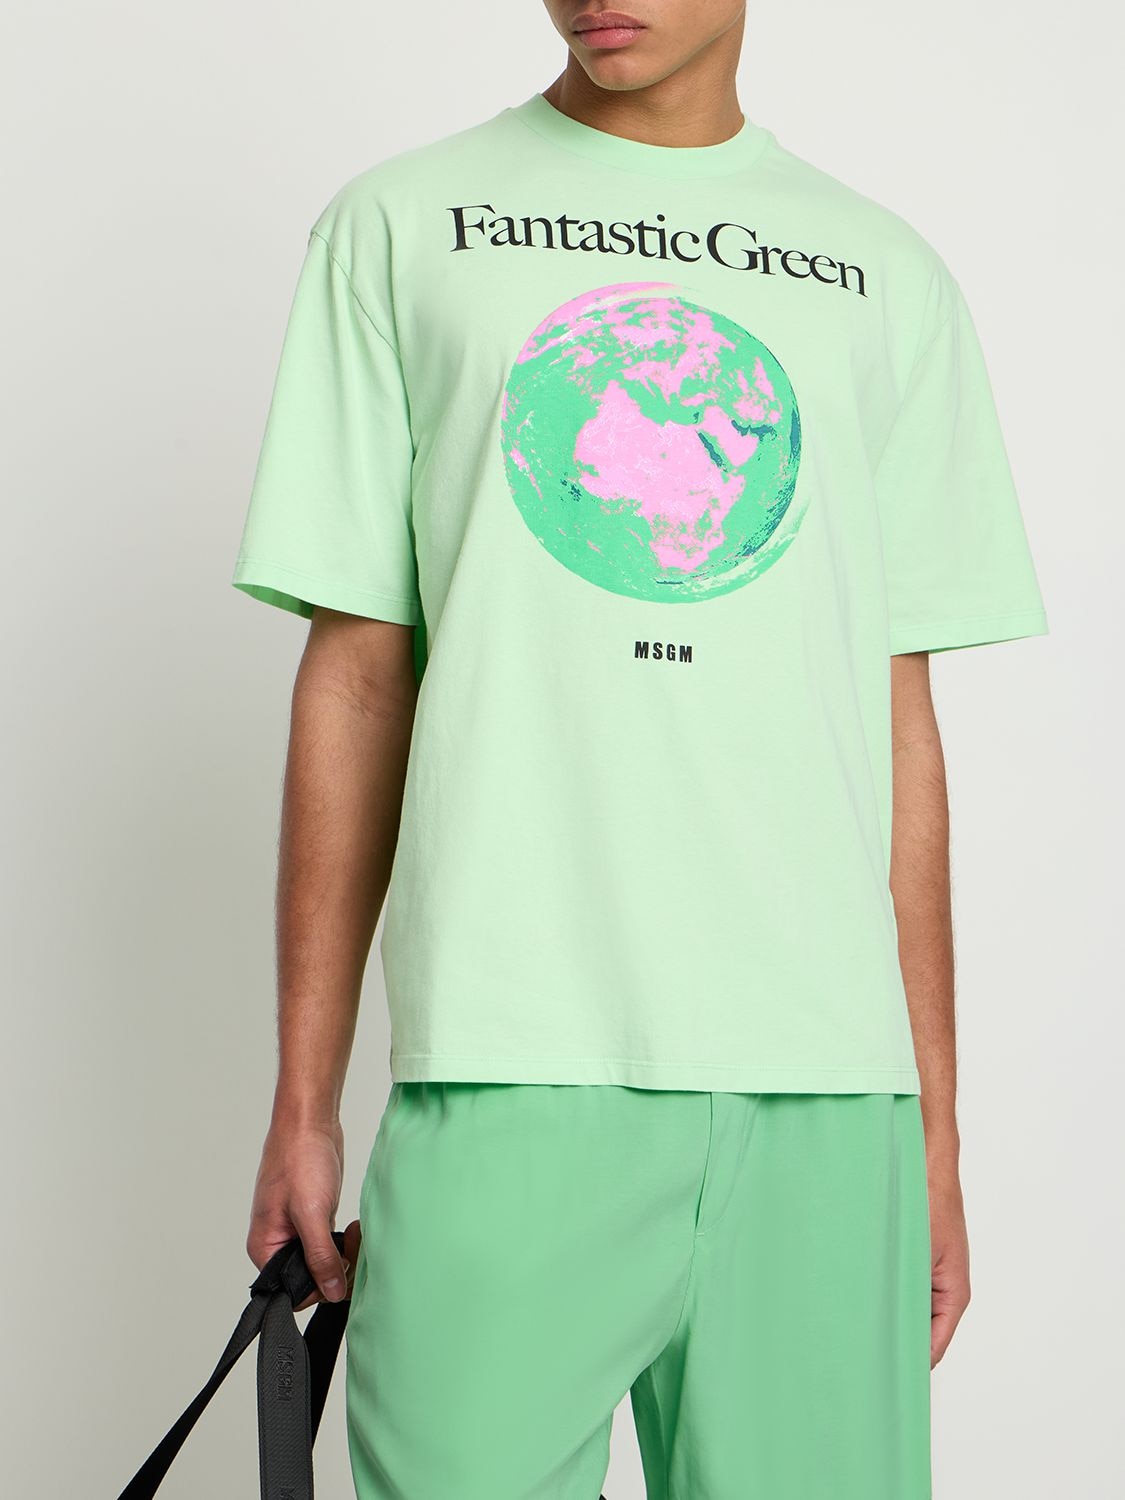 Msgm Fantastic Green Organic Cotton T-shirt